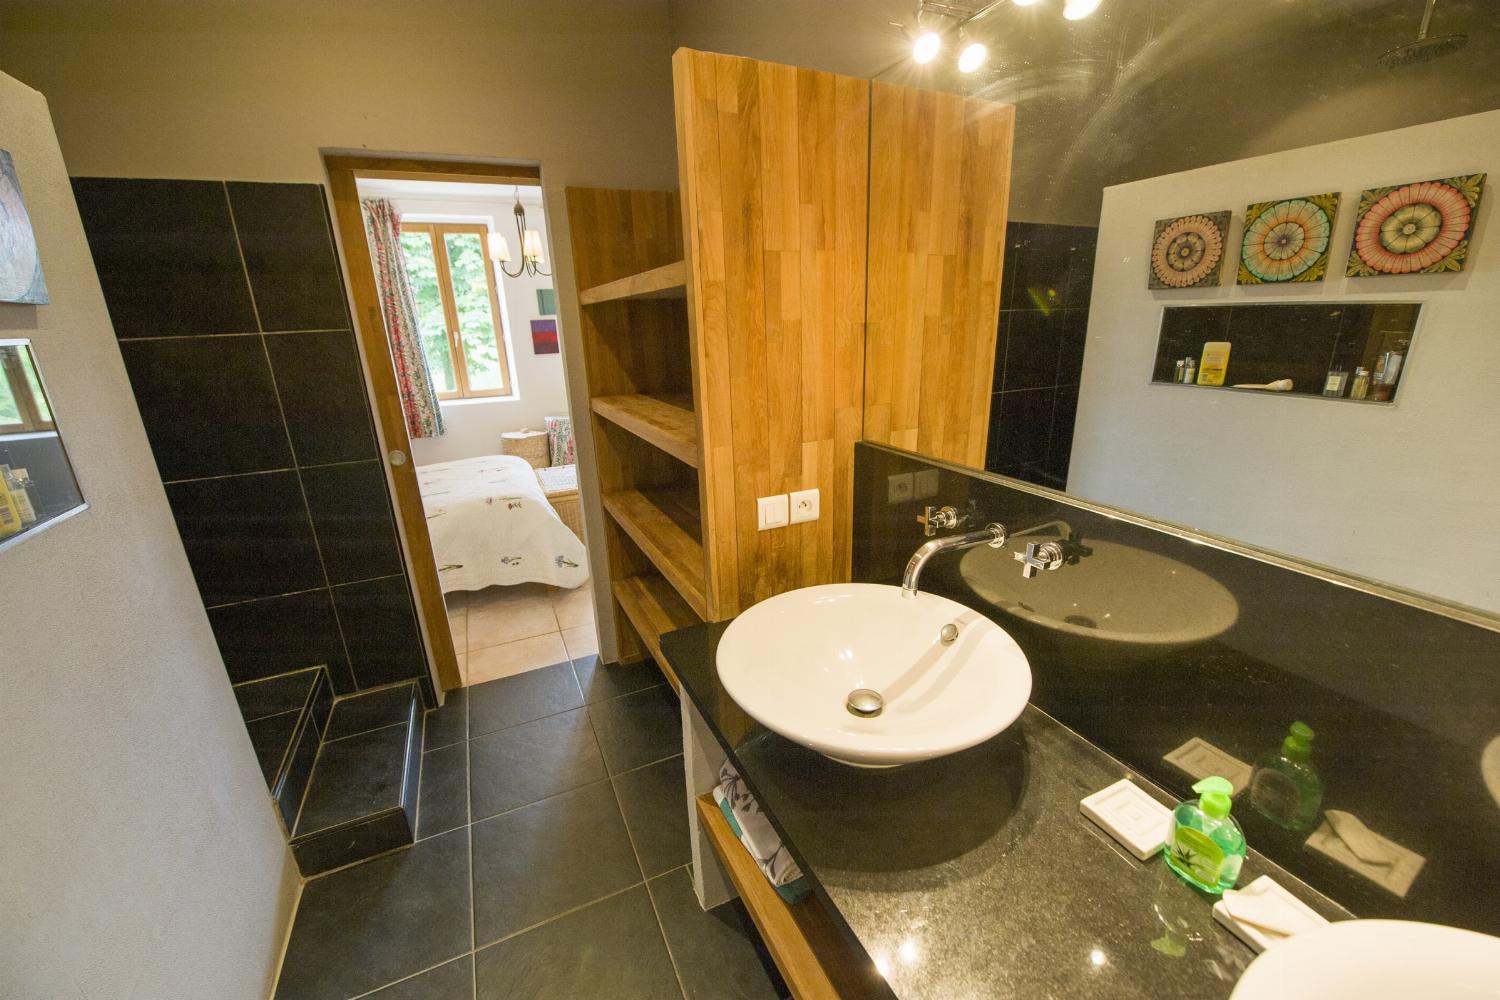 Bathroom | Rental home in Haute-Garonne